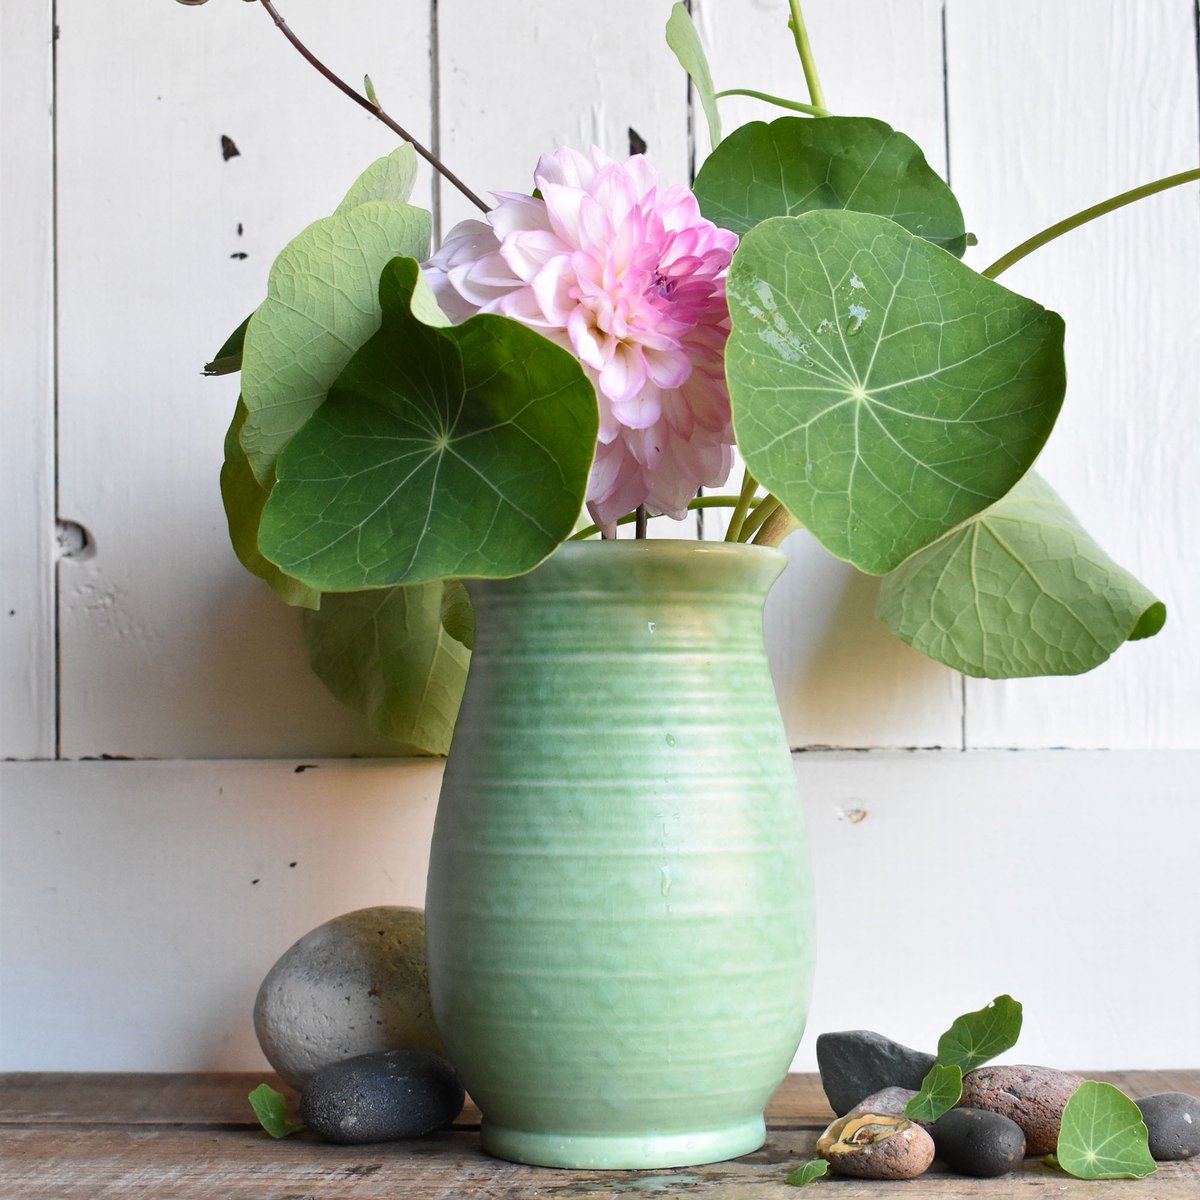 A Crown Ducal vase with an attractive fresh green mottled matt-finish glaze. Perfect for some hastily-snipped nasturtium leaves. Now in the online shop... #vintage #vintagehome #vintagegarden #vintagevase #crownducal #homegrownflowers #greenandpink #nasturtium #dahlia